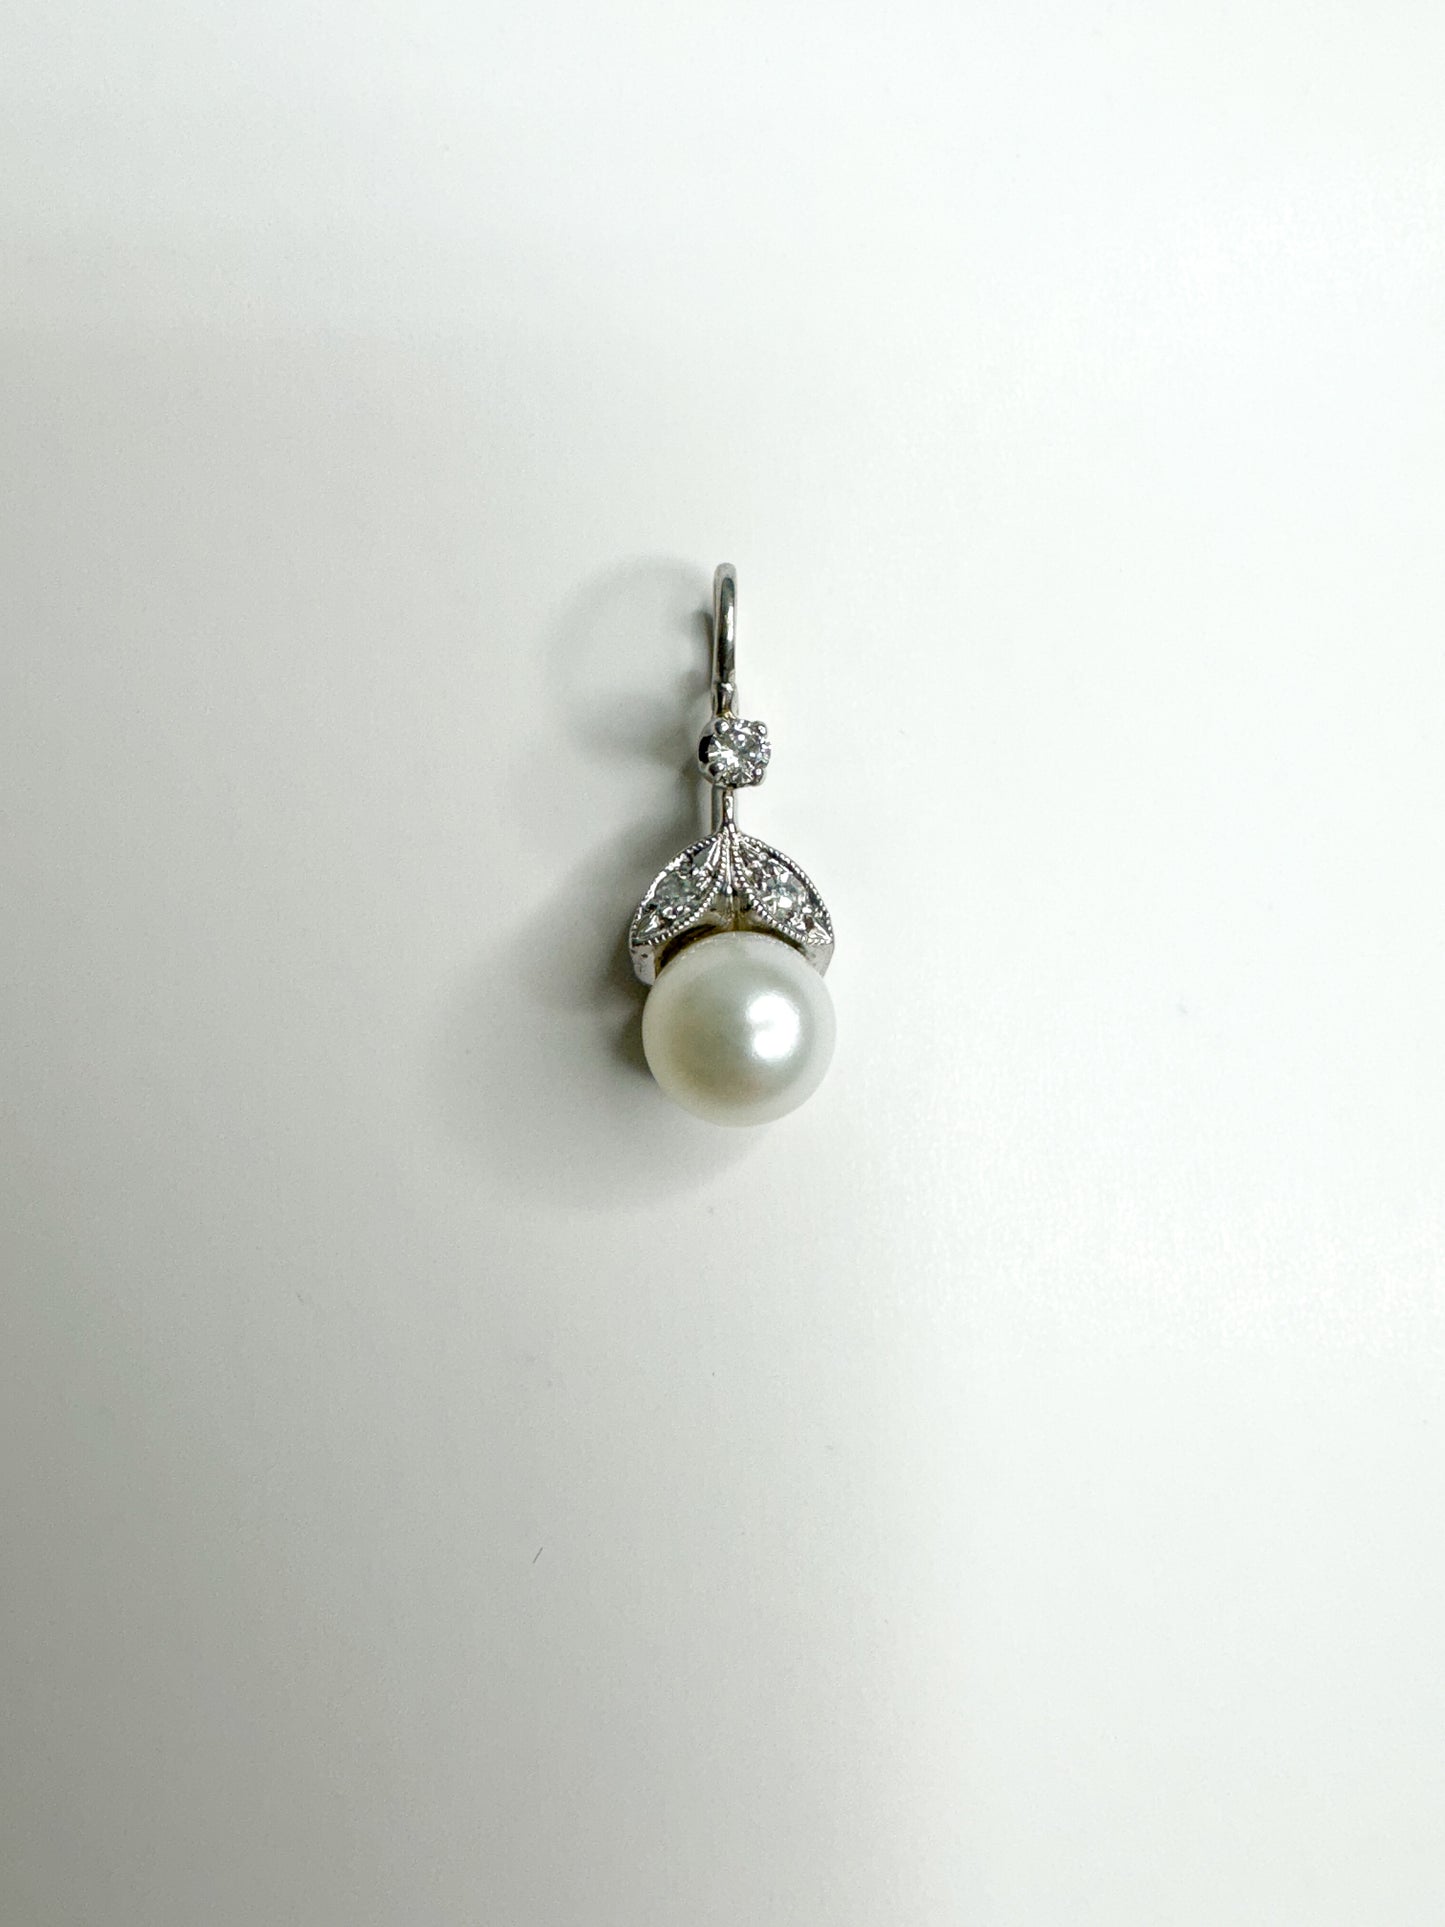 White gold, Diamond and Pearl pendant